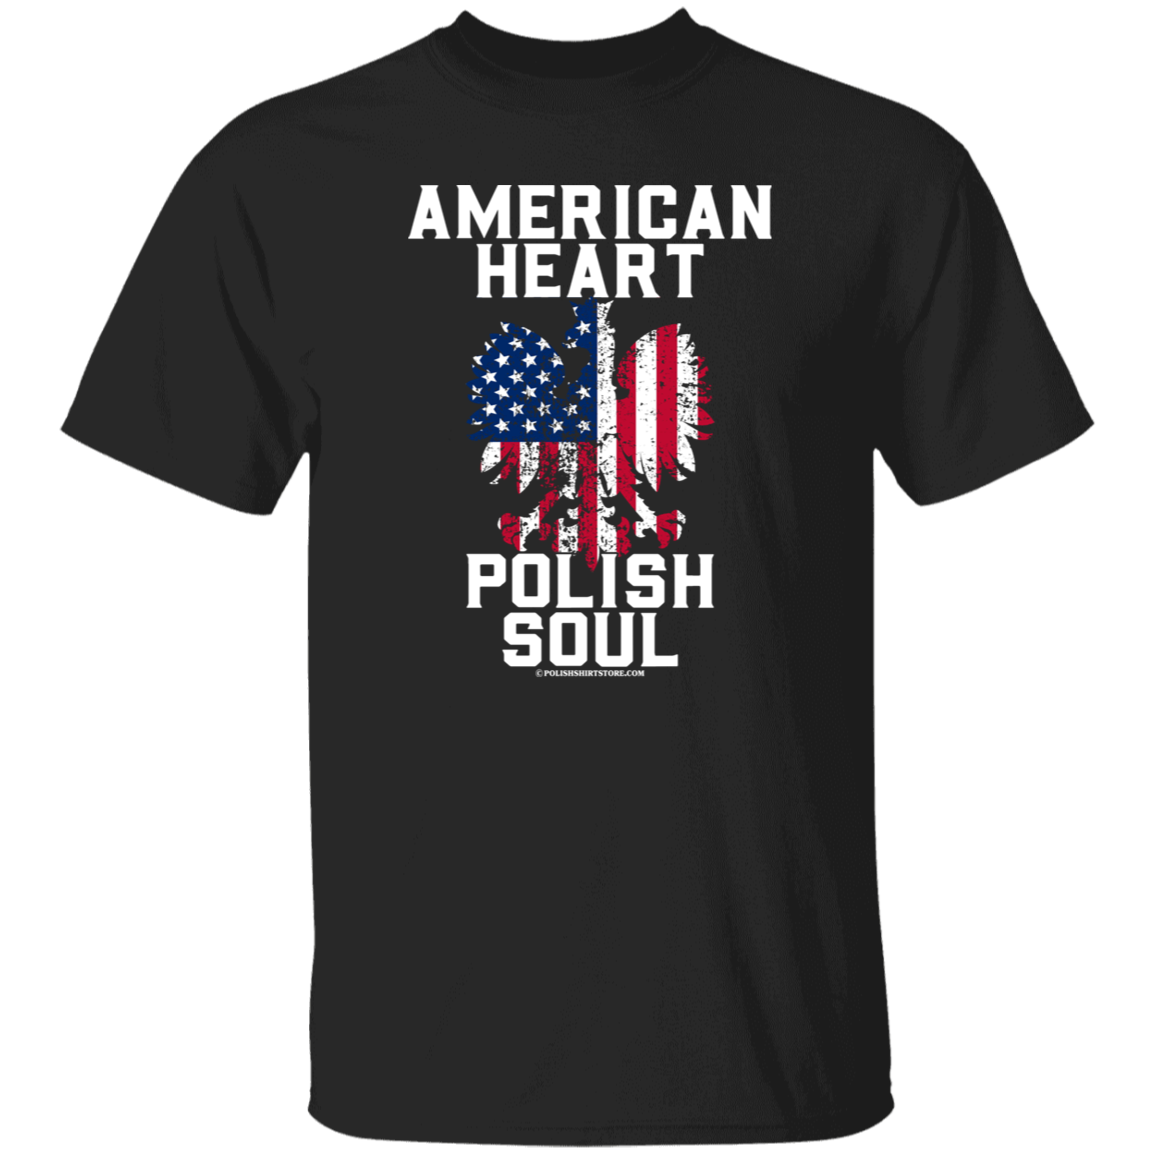 American Heart Polish Soul Apparel CustomCat G500 5.3 oz. T-Shirt Black S